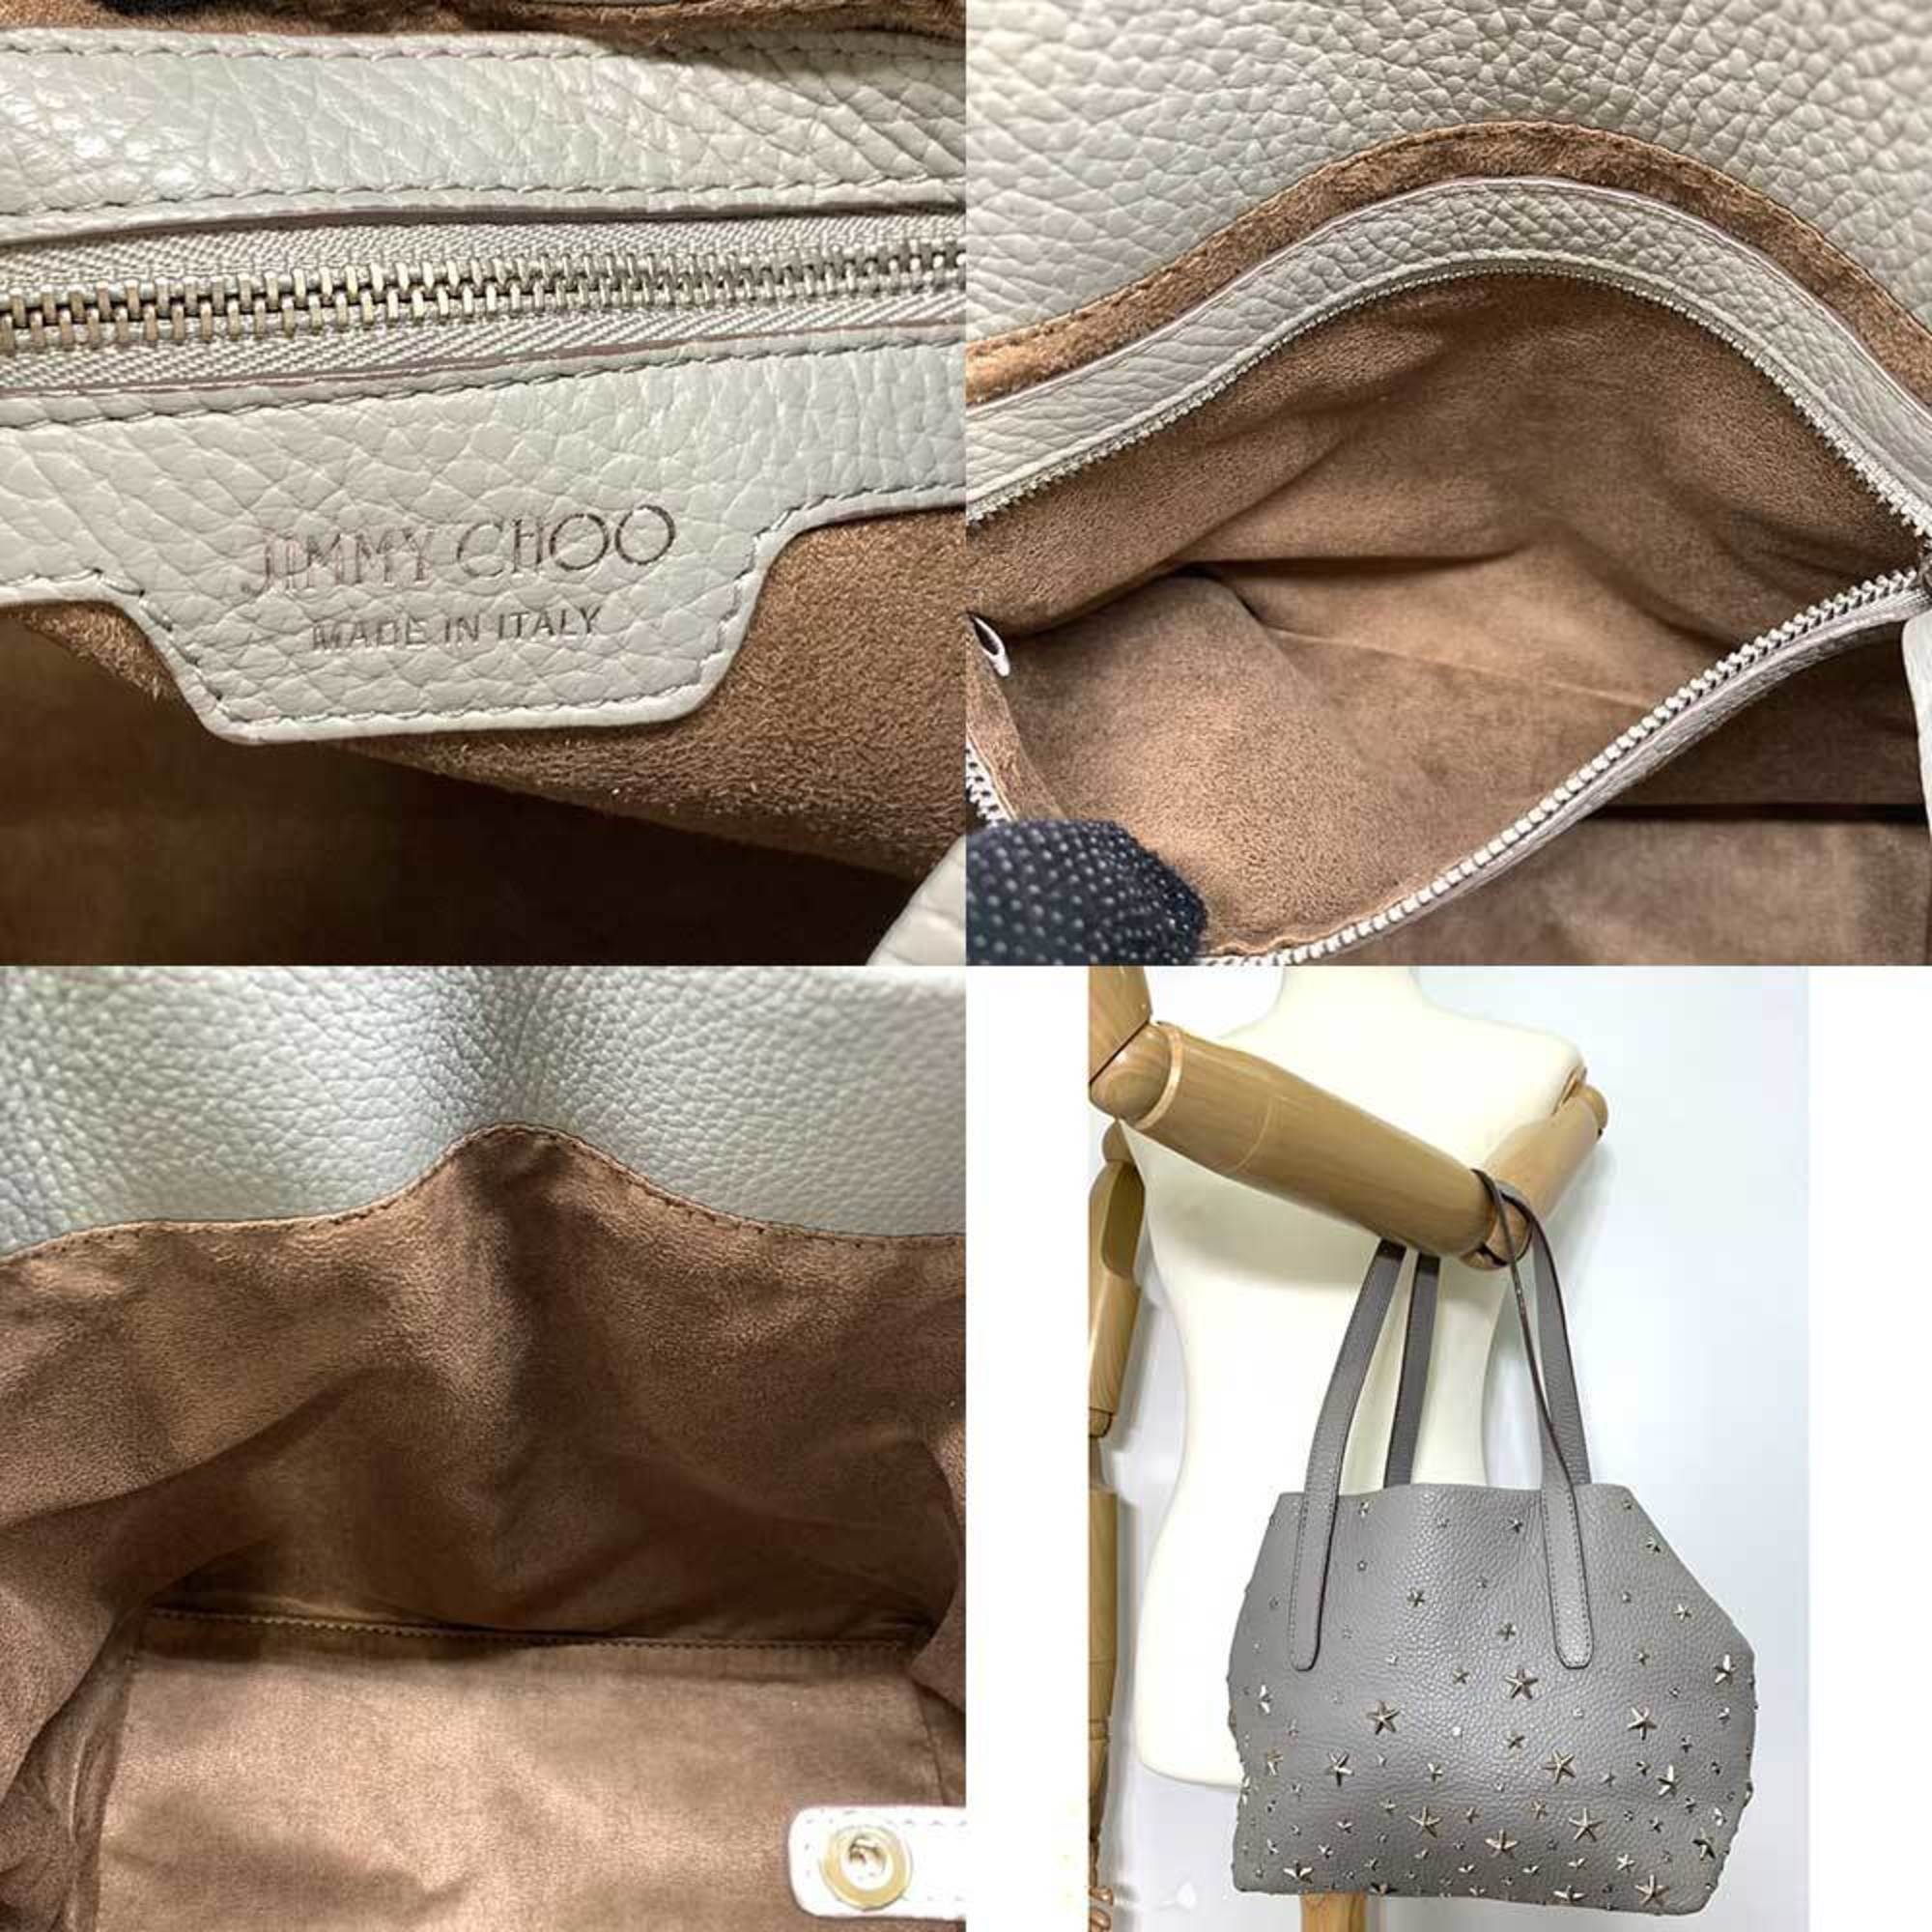 Jimmy Choo Bag Sophia S Grey Handbag Tote Star Studs Rhinestones Women's Leather JIMMYCHOO